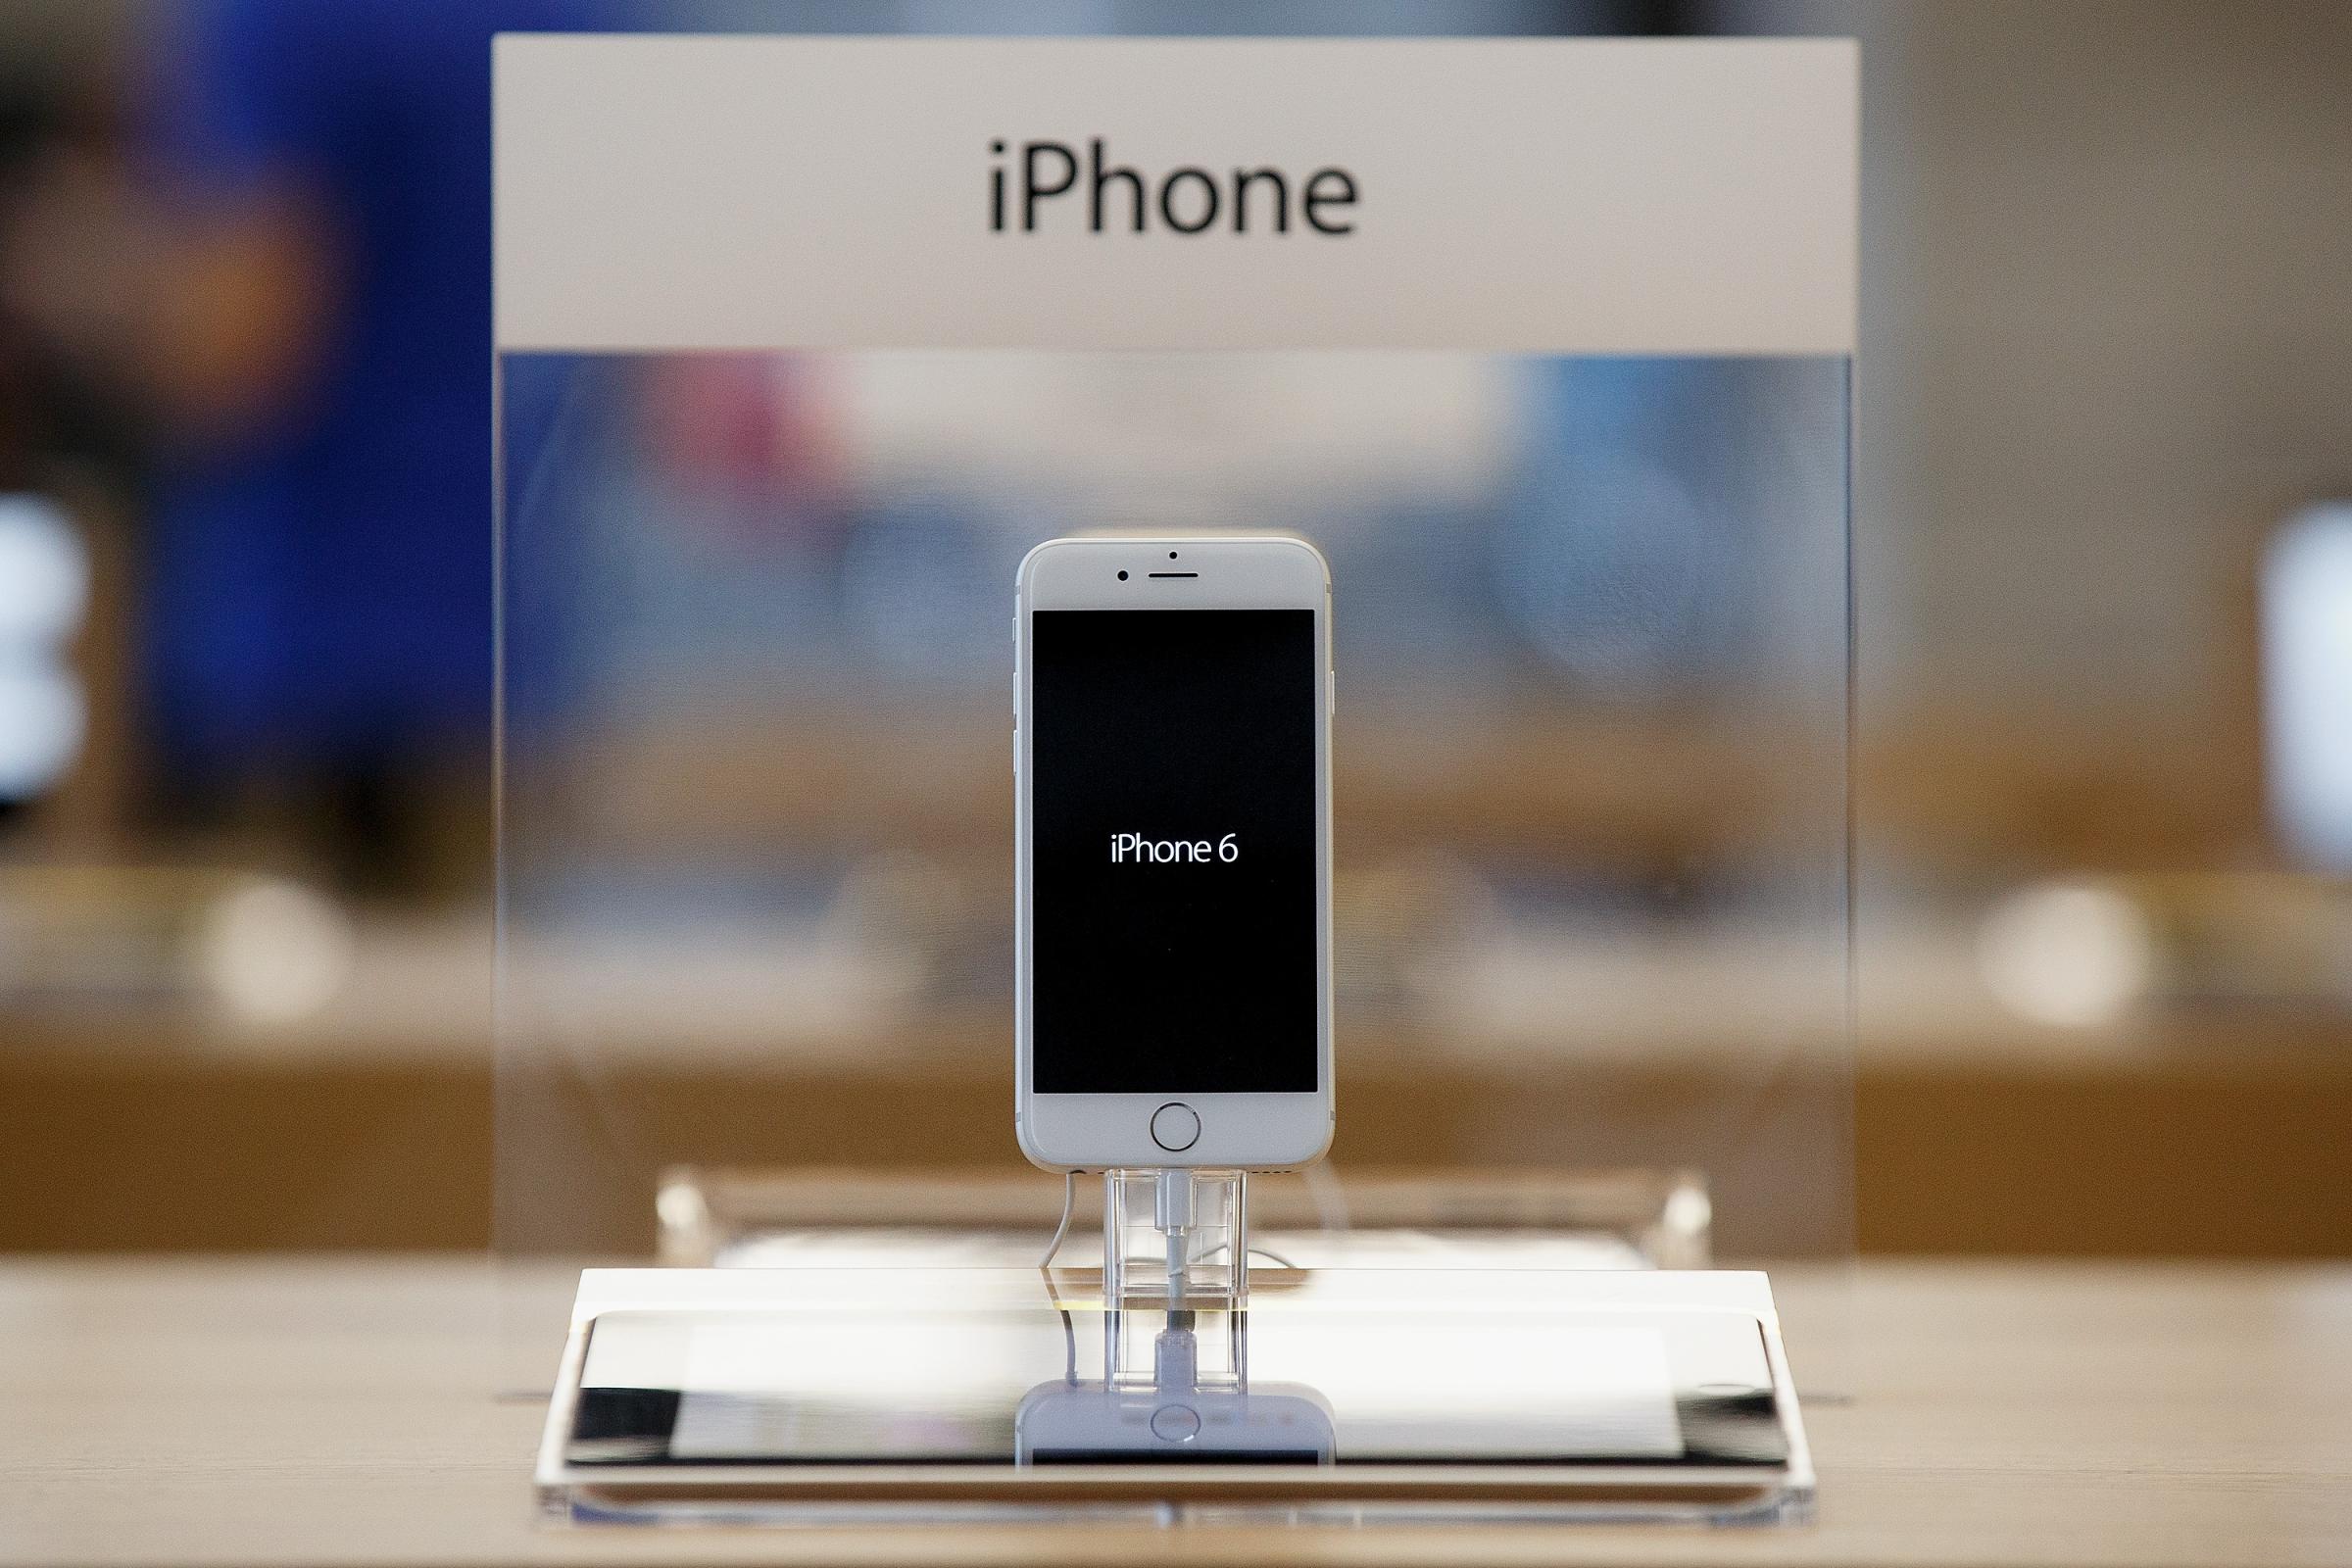 Apple Inc. Launches iPhone 6 And iPhone 6 Plus Smartphones In Madrid